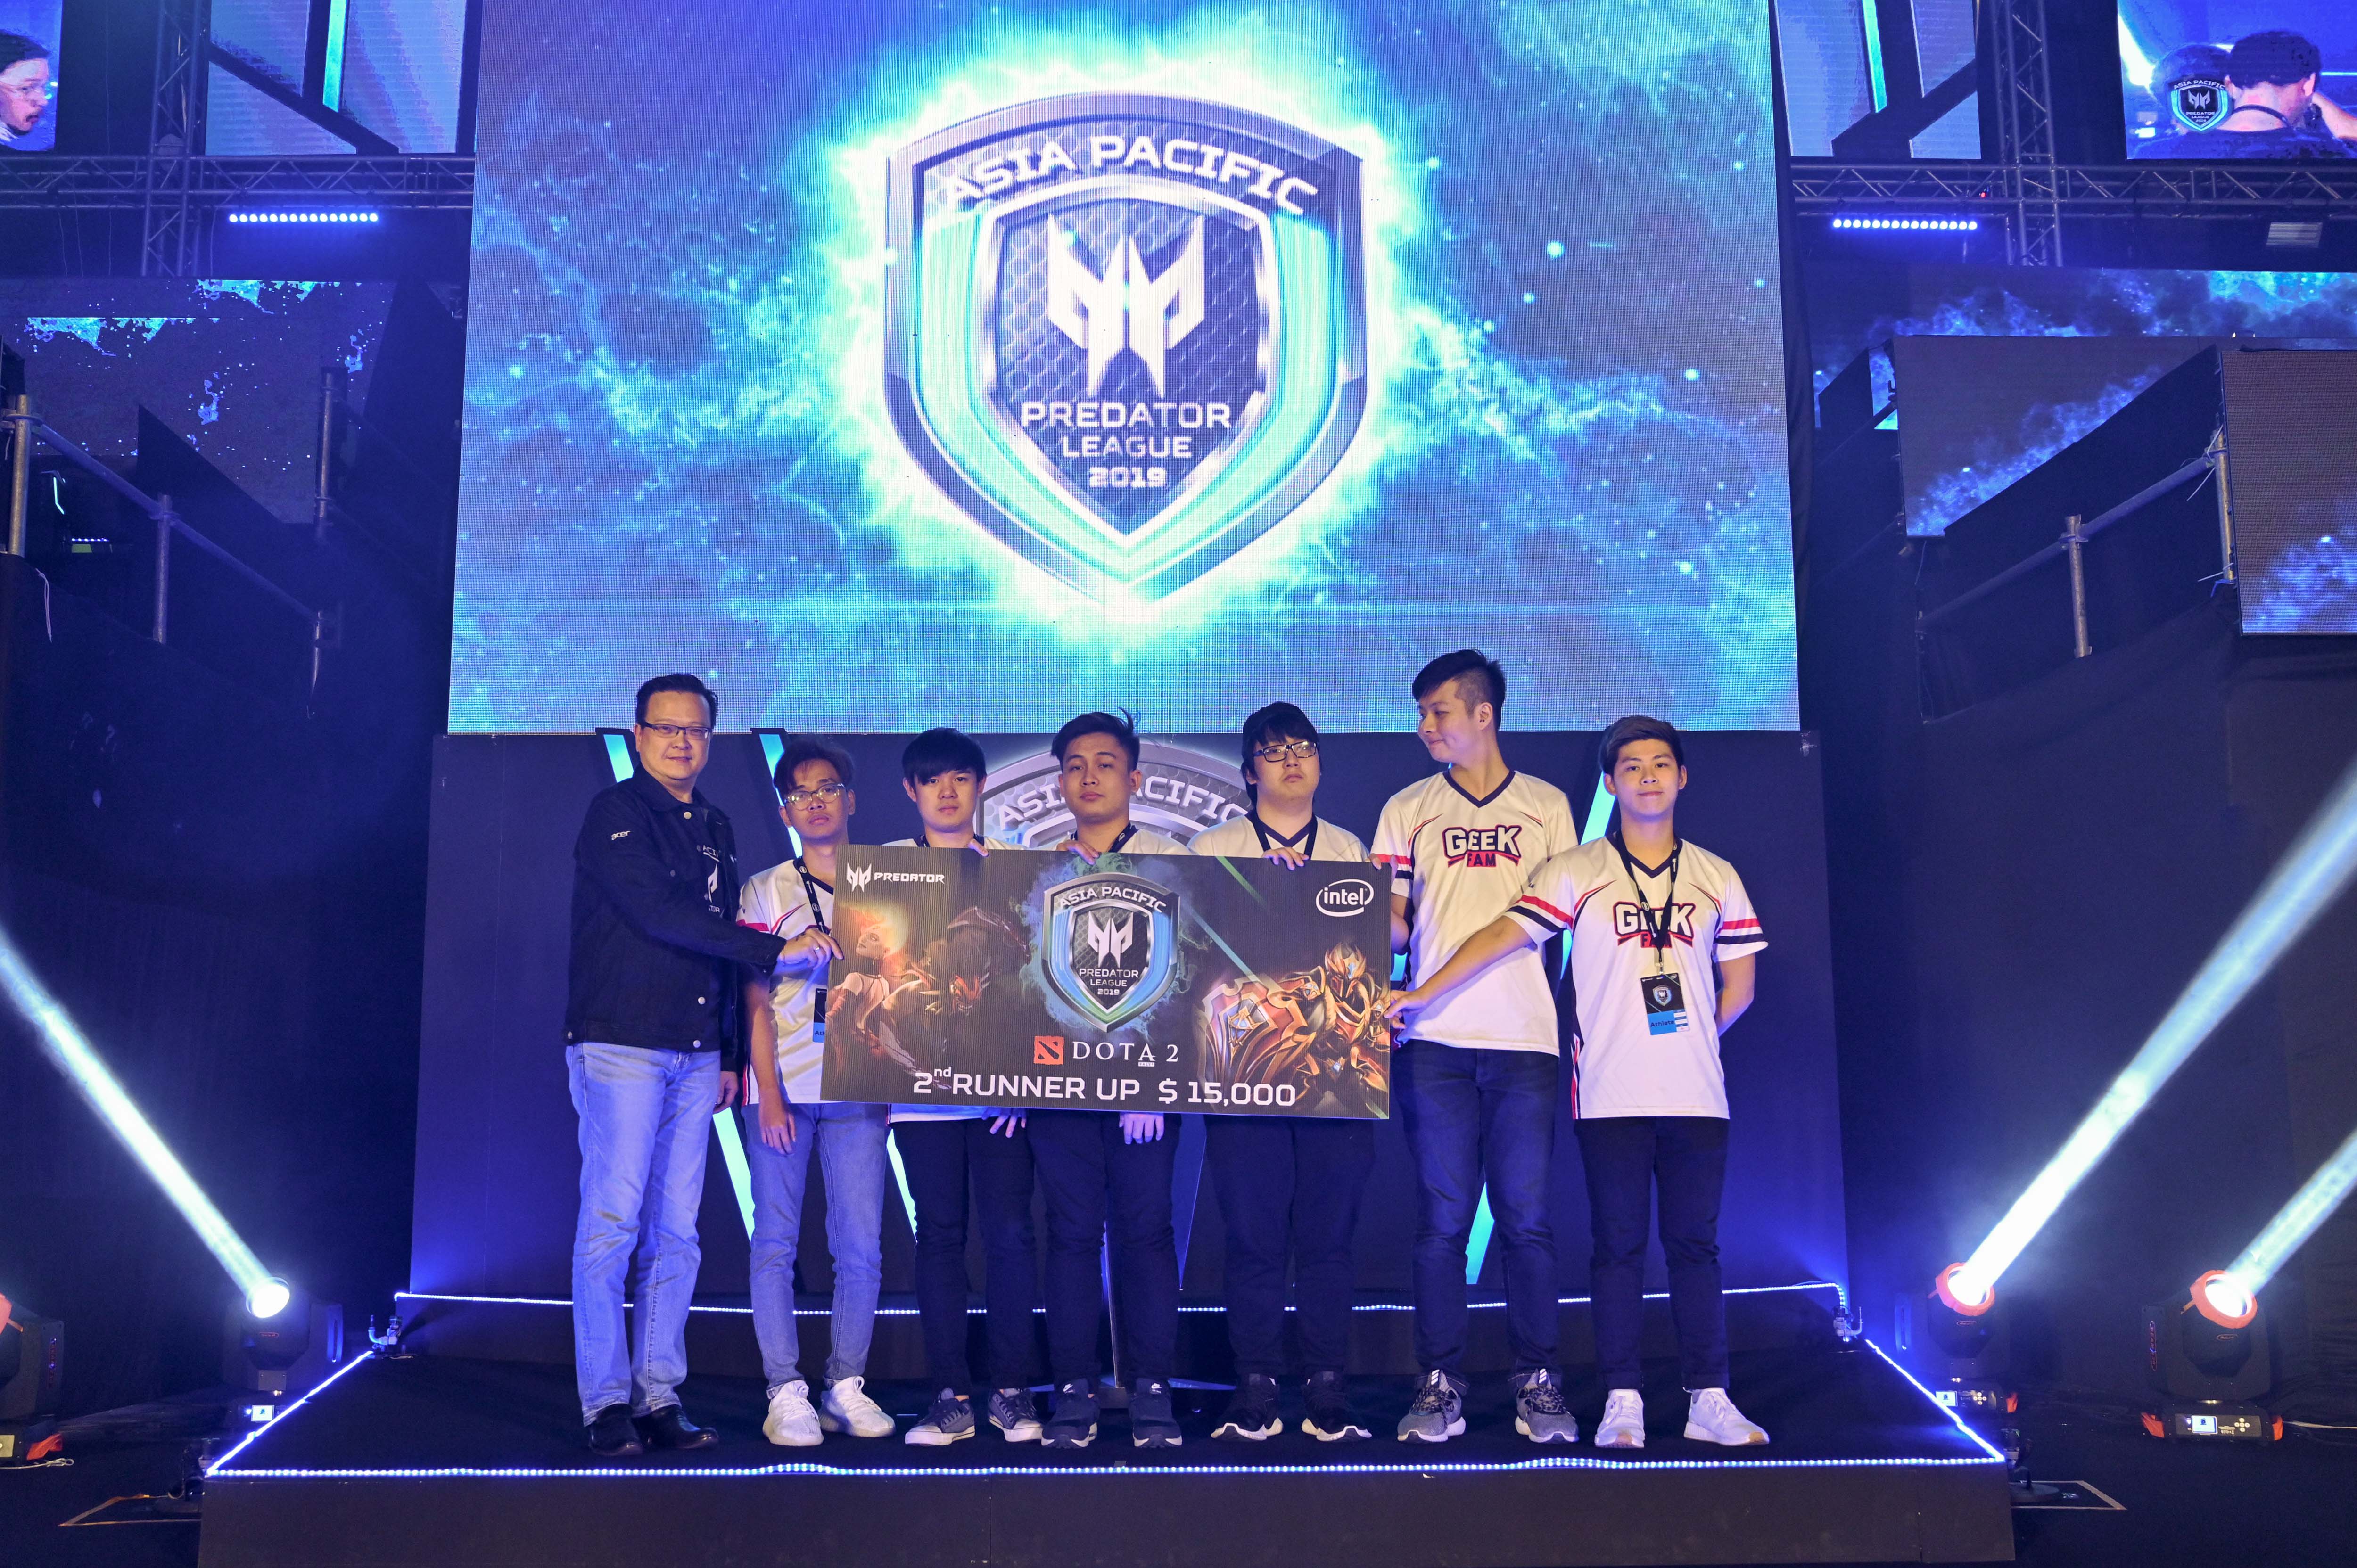 08 dsc 3577 17 02 19 บรรยากาศงาน Asia Pacific Predator League 2019 สุดยอดขุนพลทีมอีสปอร์ตเข้าร่วมการแข่งขันรอบแกรนด์ไฟนอล